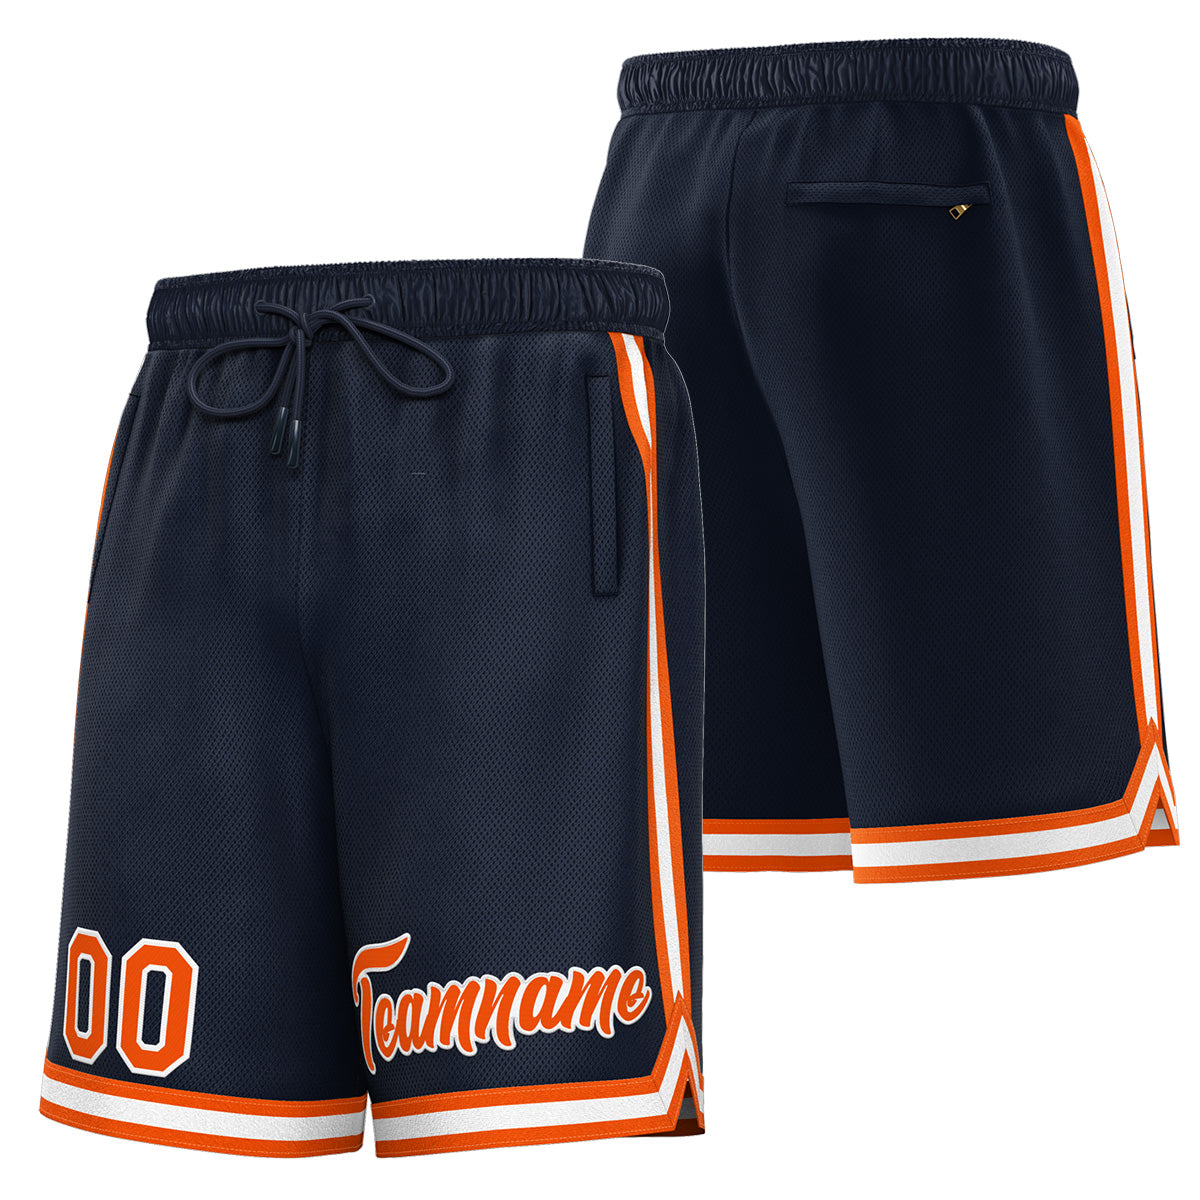 kxk custom navy basketball shorts